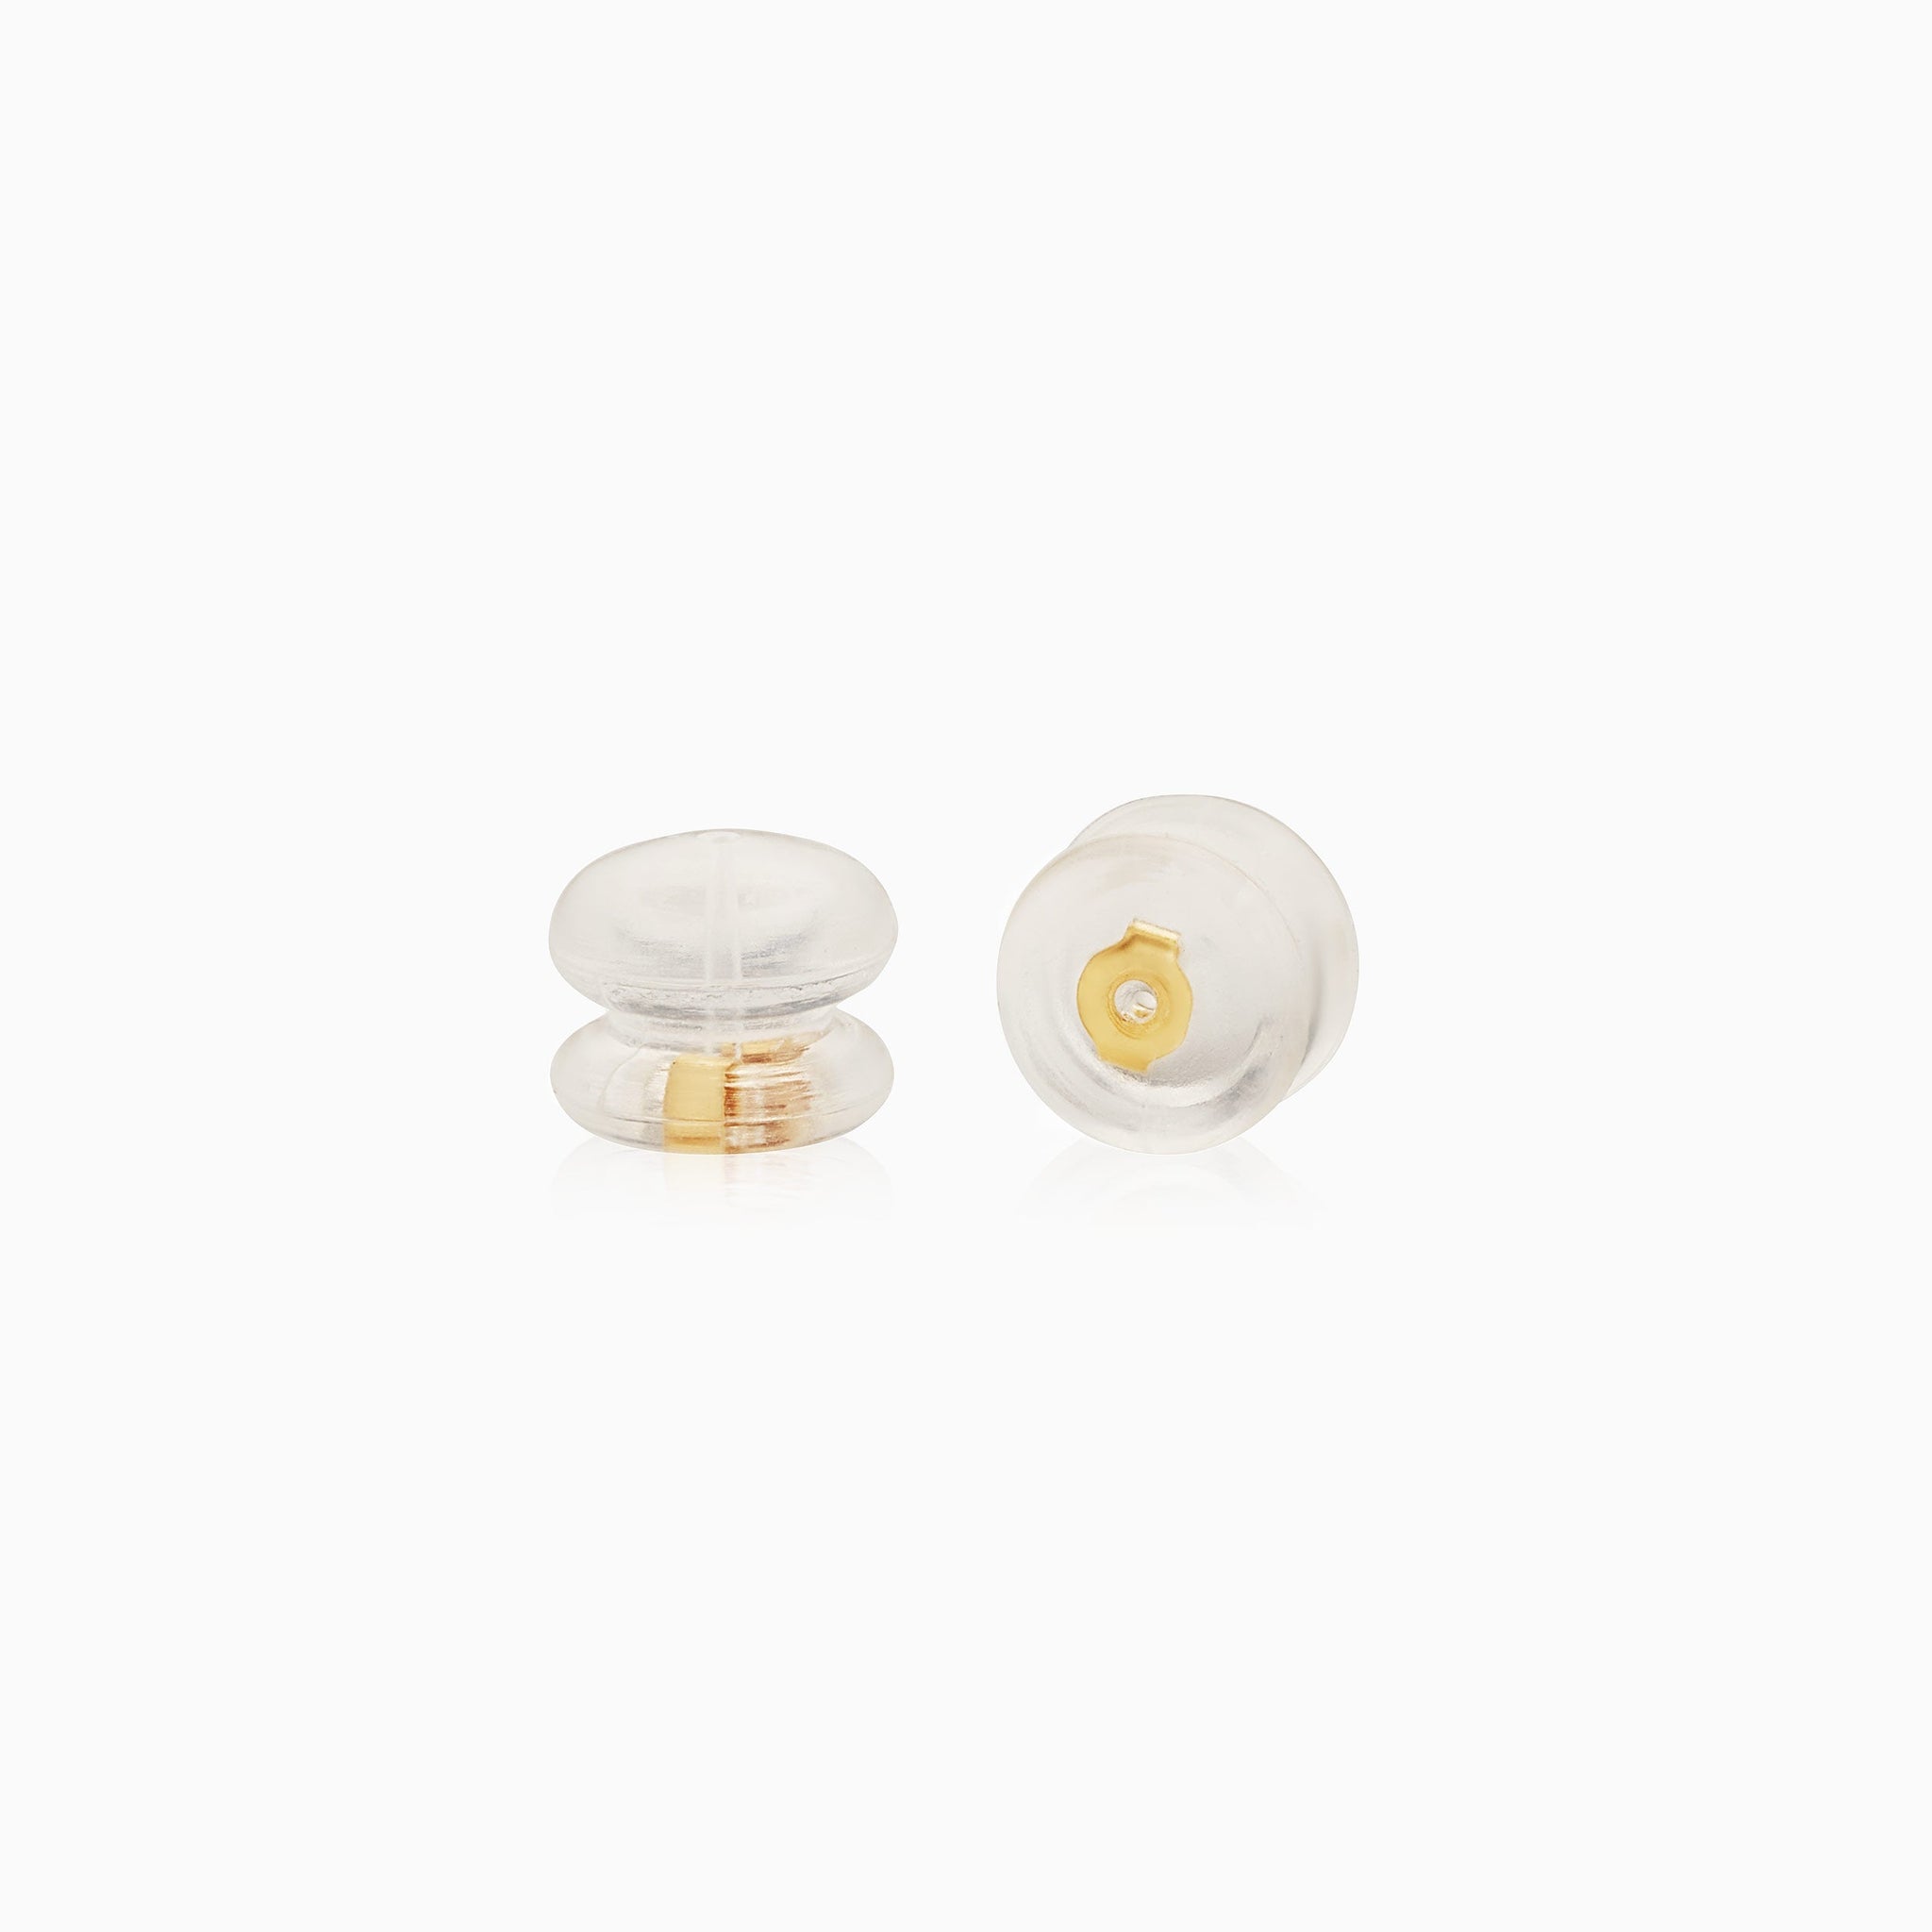 Comfort Clutch Earring Backs - 8 pieces (4 pair)